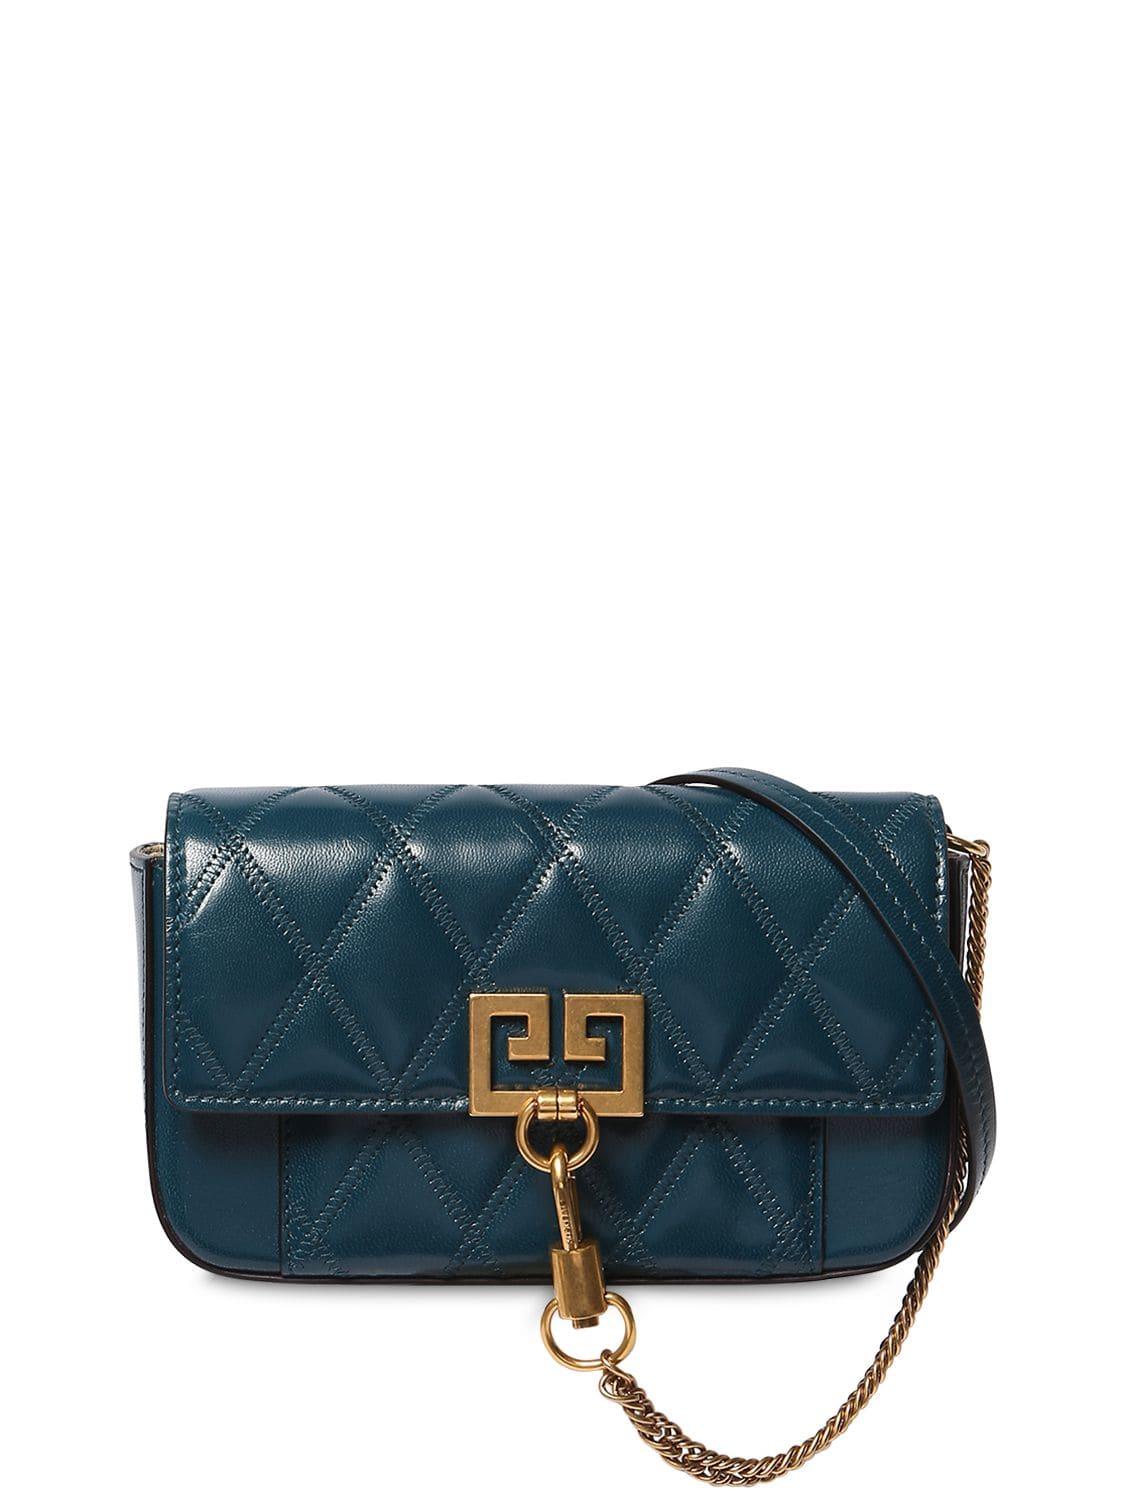 Givenchy Mini Pocket Quilted Leather Shoulder Bag in Blue - Lyst